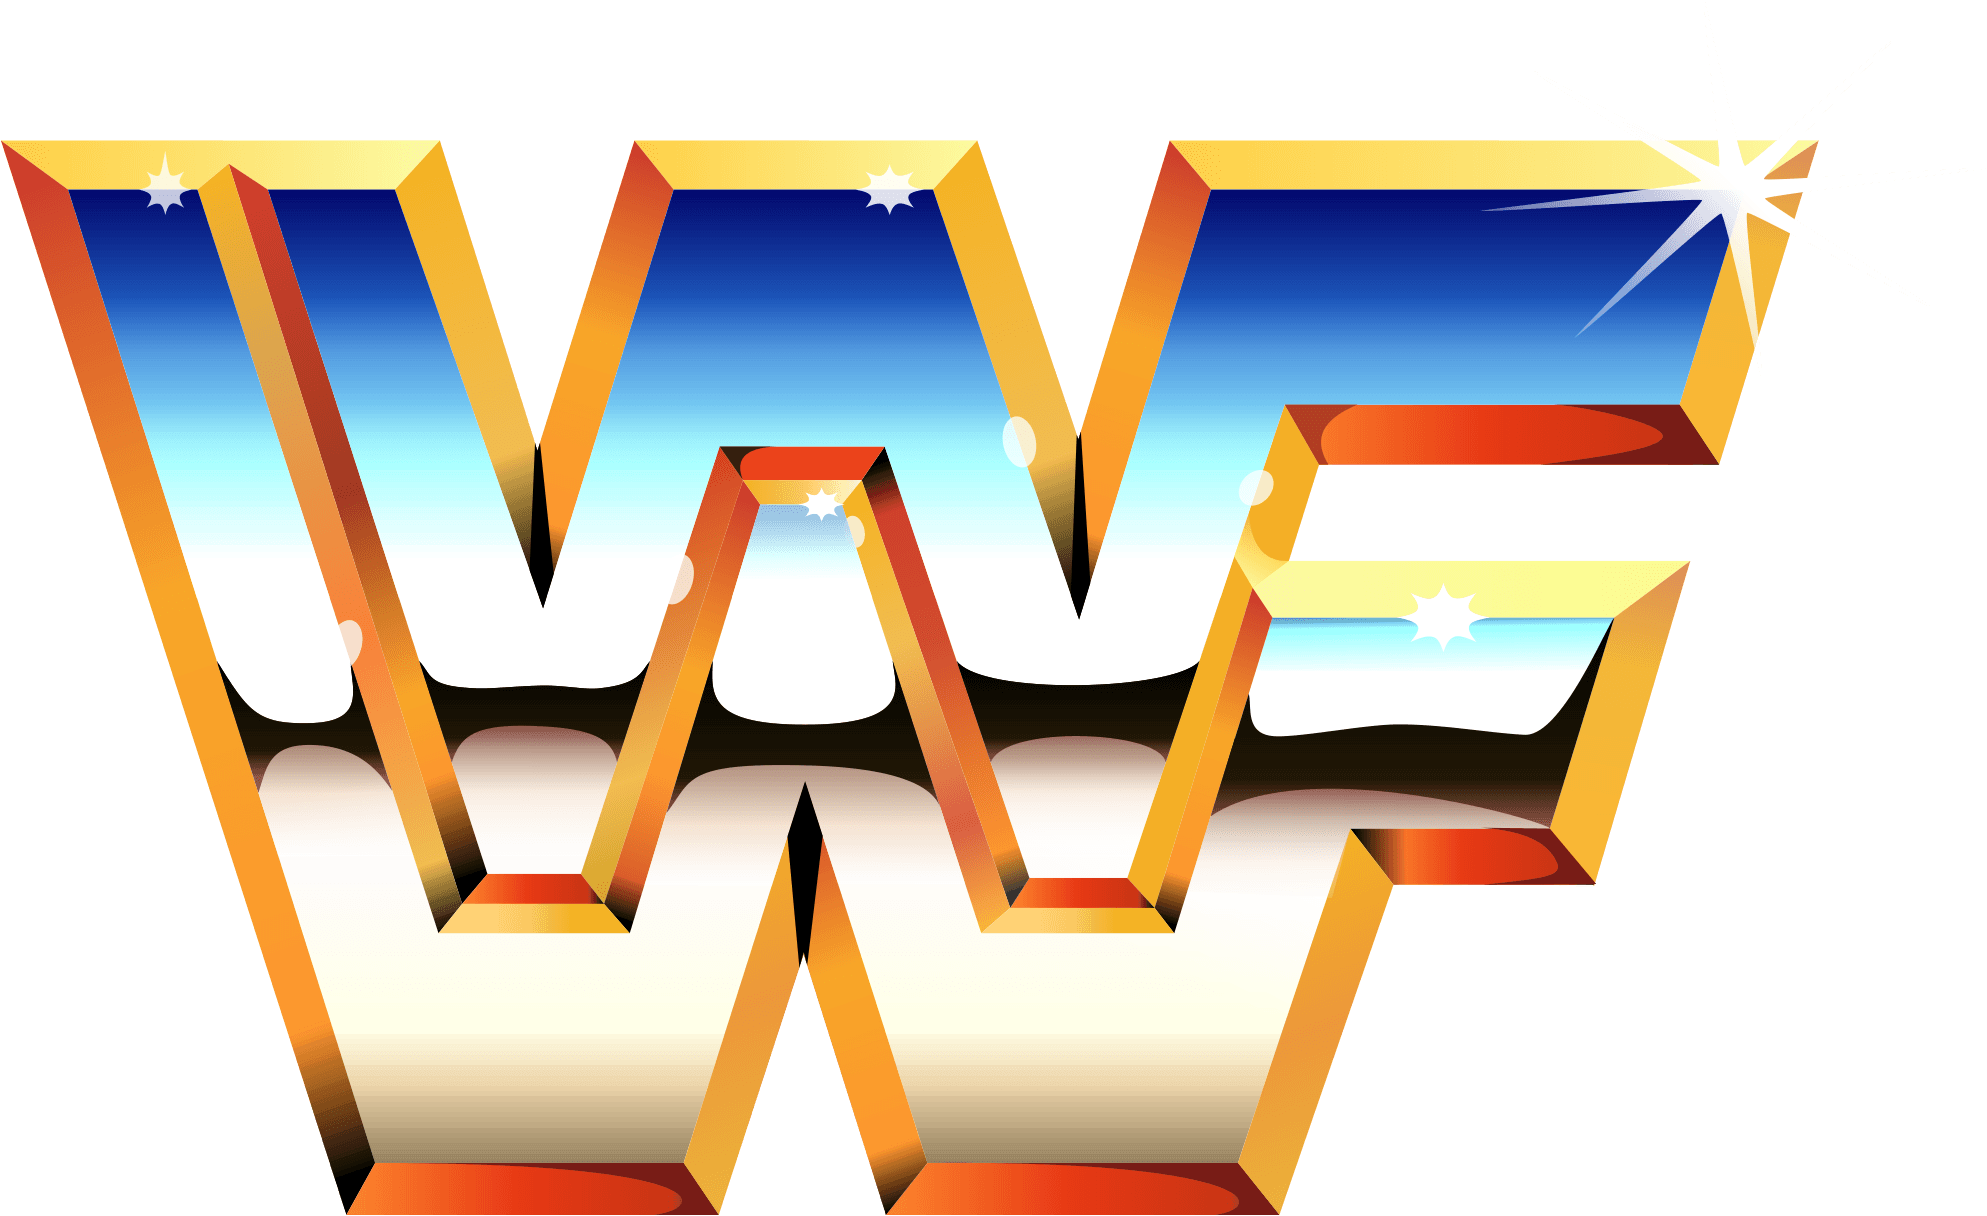 Bing Ultimate Logo - WWE Wrestling Logo Image. in the ring. Wwf logo, Wrestling